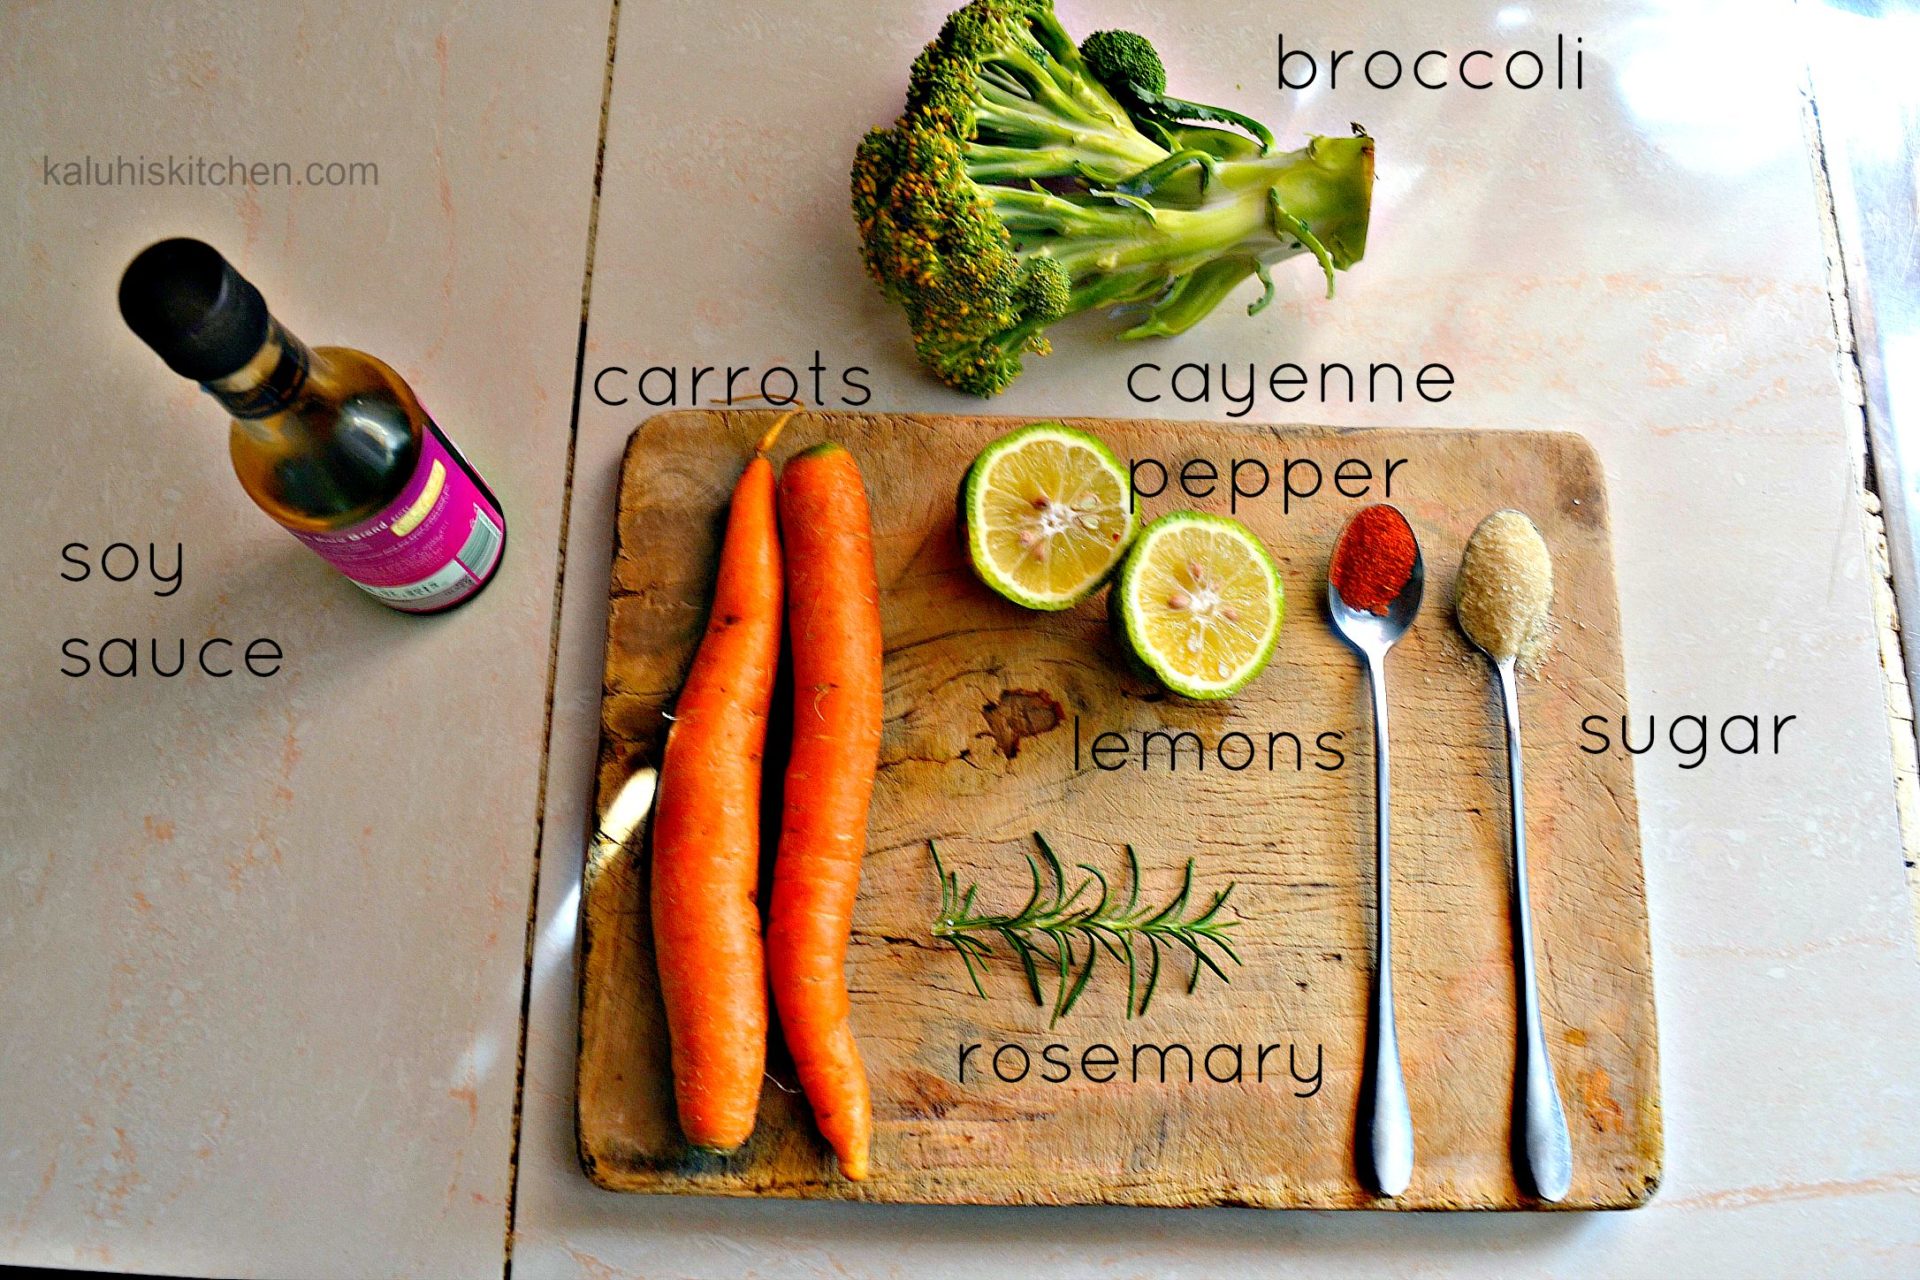 broccoli and carrots chilli caramel ingredients_broccoli recipes